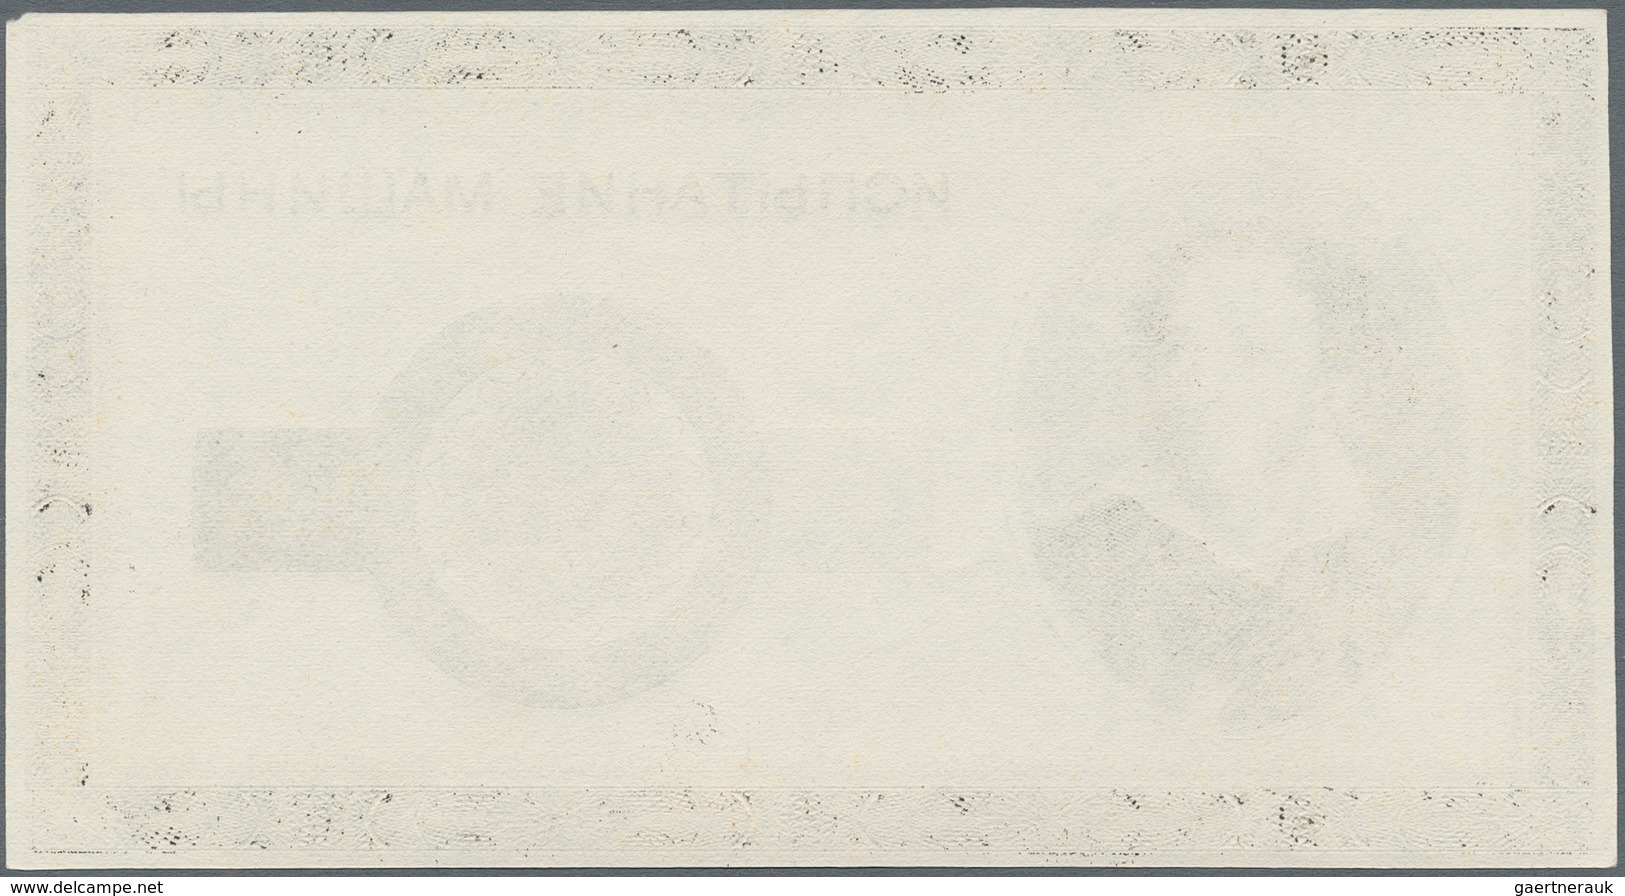 Testbanknoten: Intaglio Printed Test Note With Portrait Of Alexander Pushkin And Text "испытание маш - Specimen